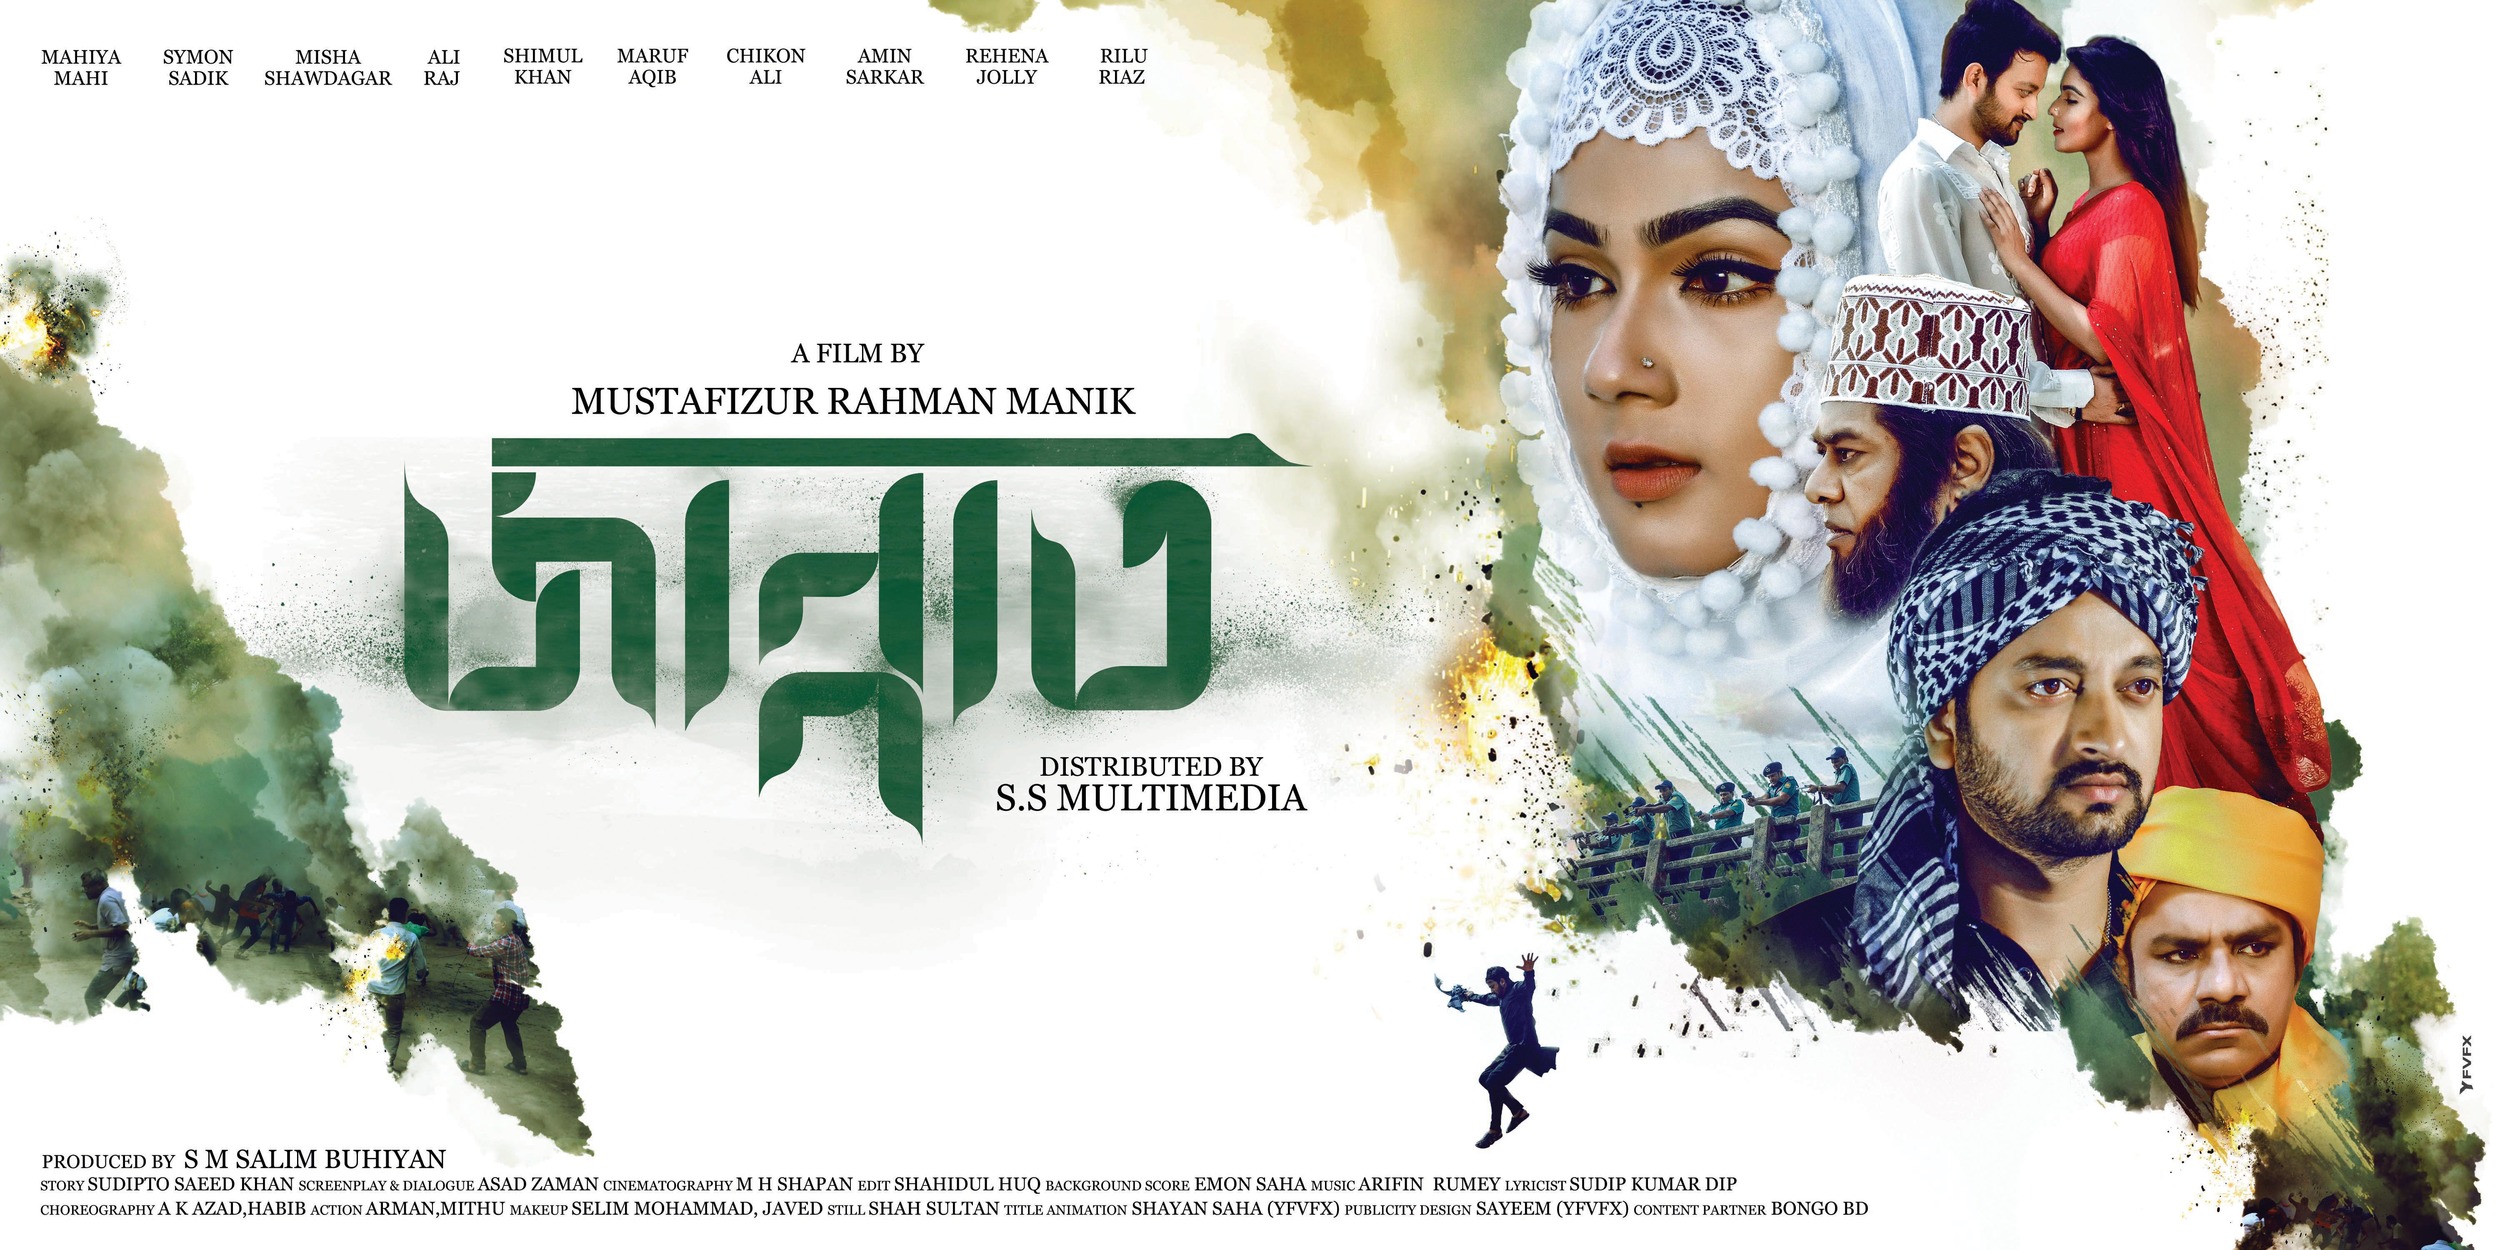 Mega Sized Movie Poster Image for Jannat (#9 of 10)